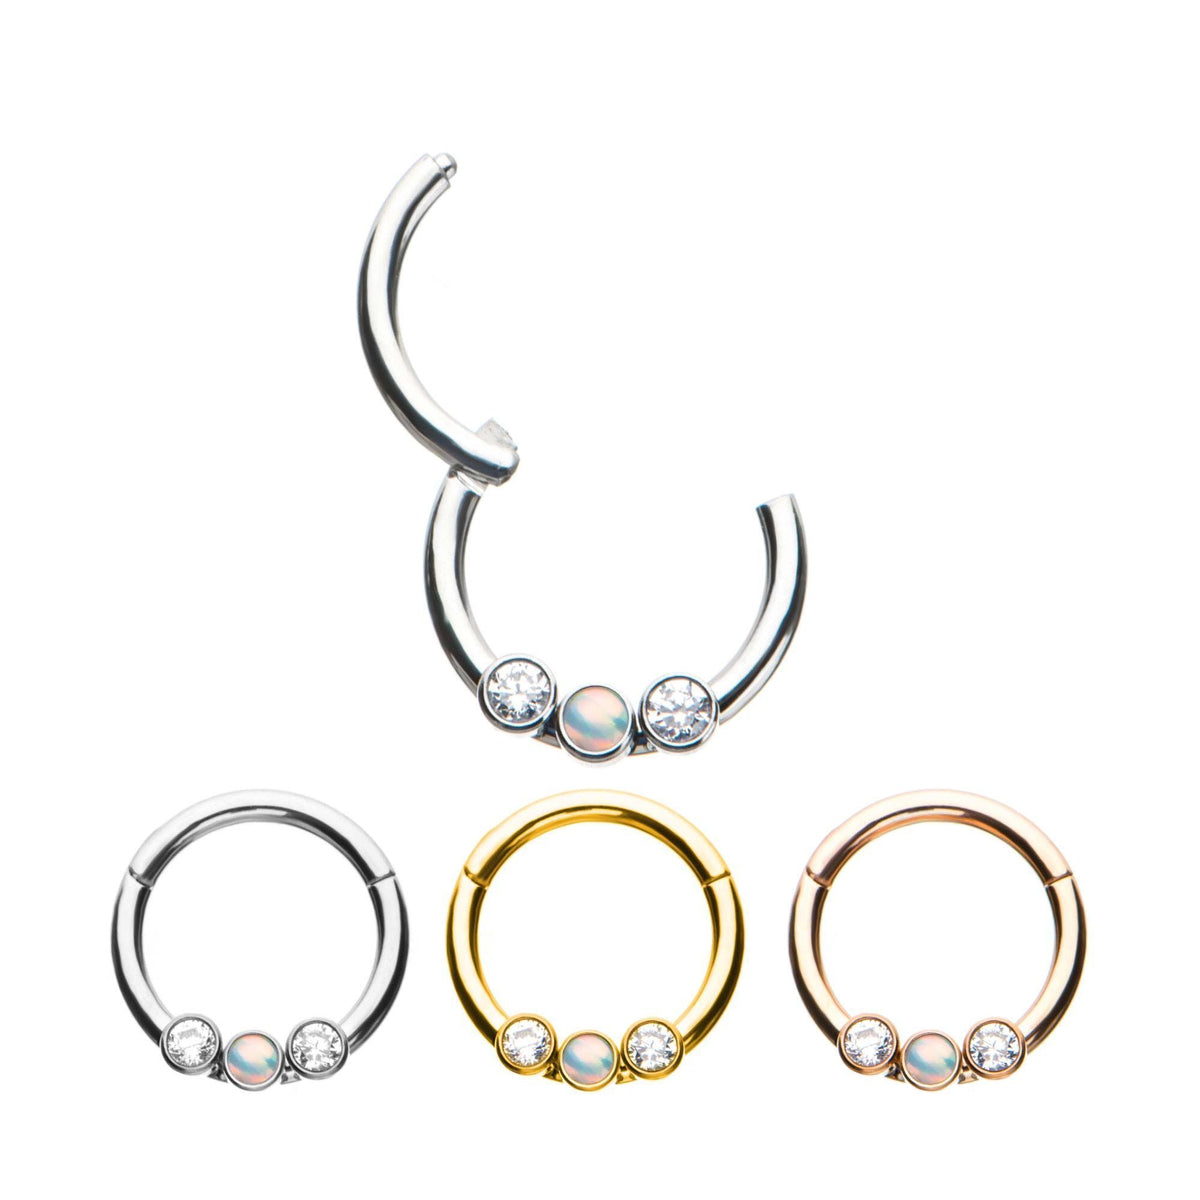 SEAMLESS CLICKER Clicker Hinged Segment Ring with Opal and Clear CZ Gem sbvsgrh3gm-opal -Rebel Bod-RebelBod